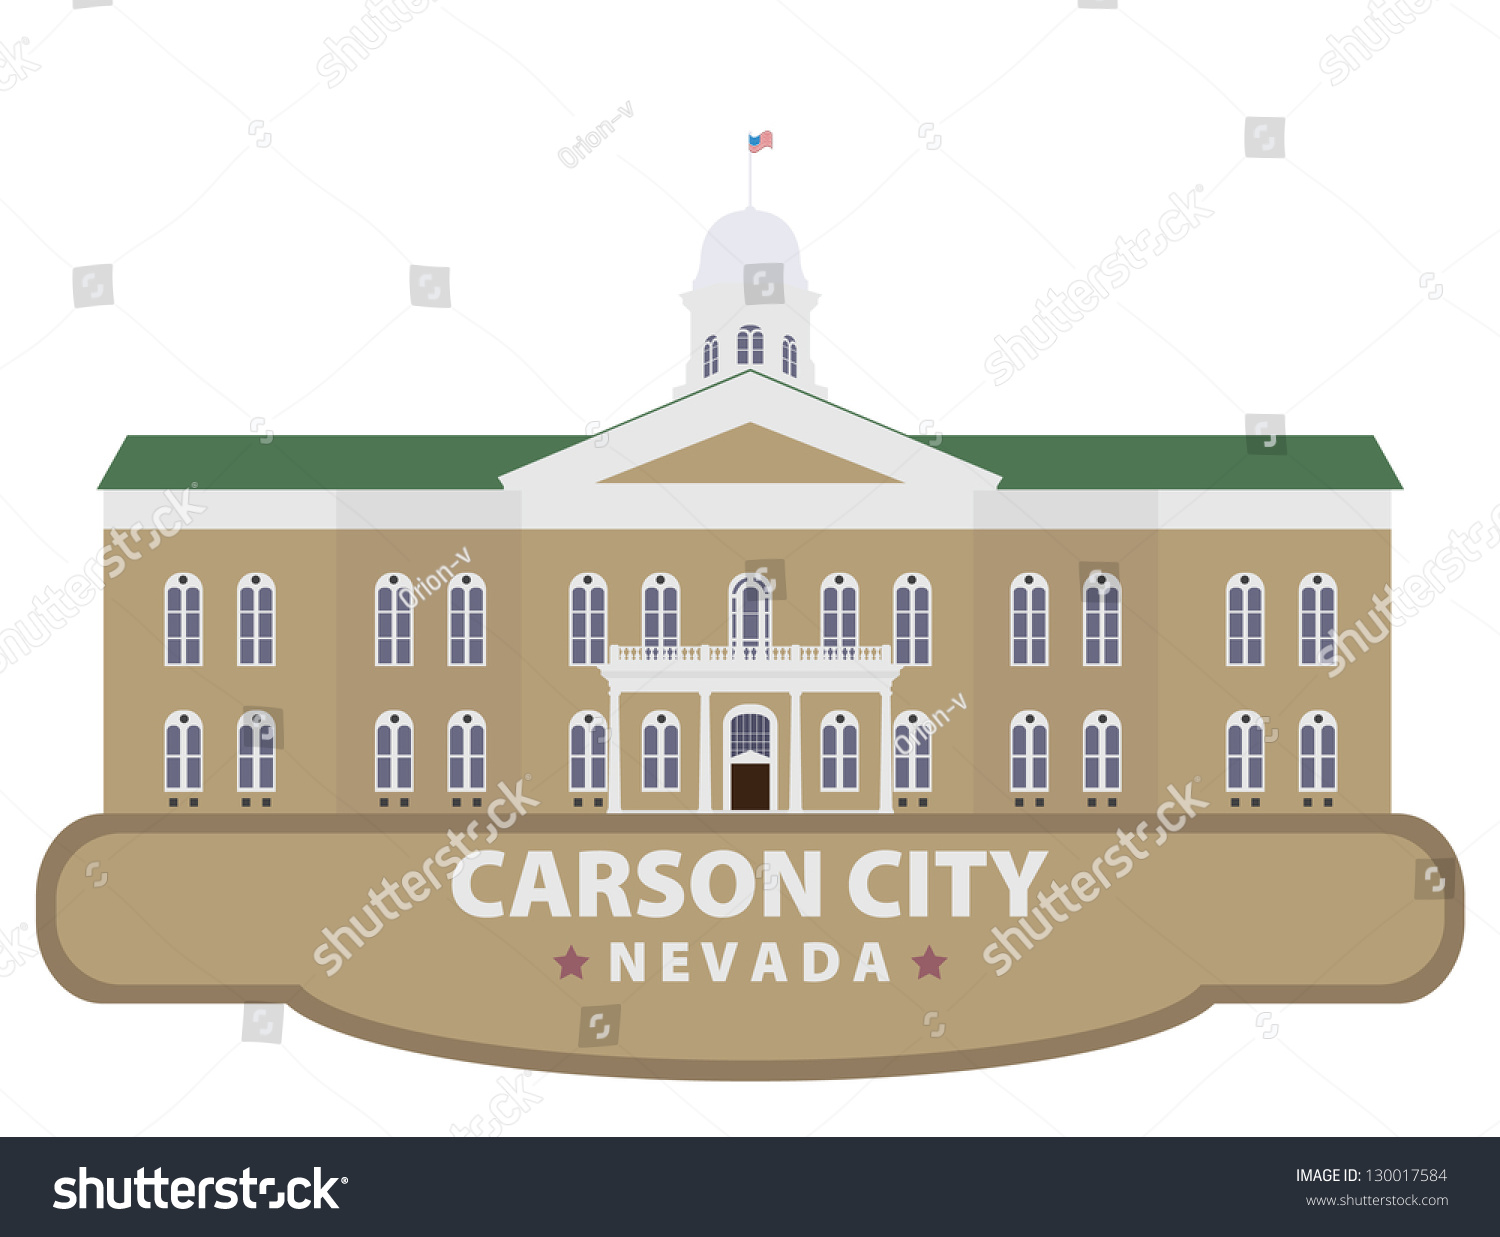 SVG of Carson city svg